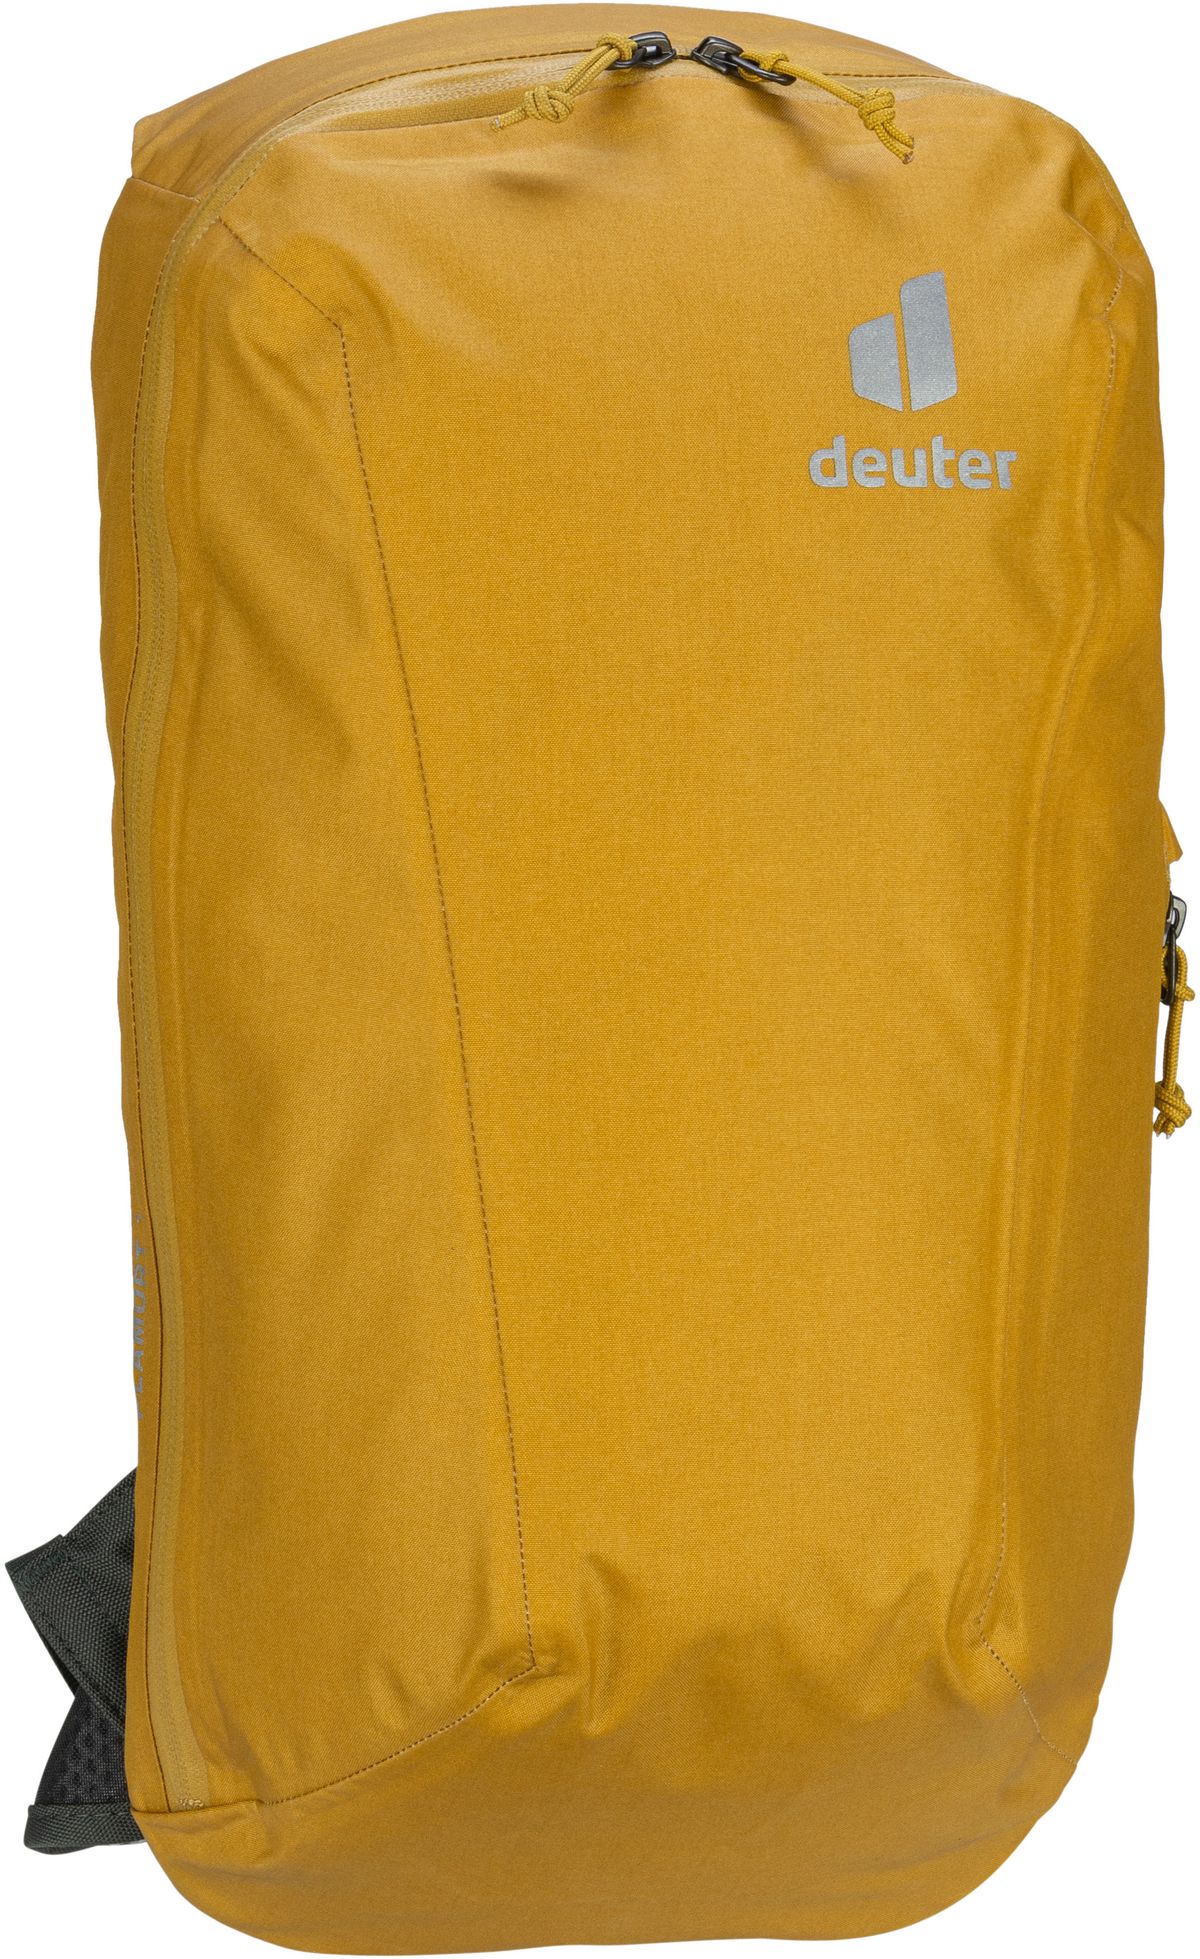 Deuter Plamort 12  in Gelb (12 Liter), Rucksack / Backpack